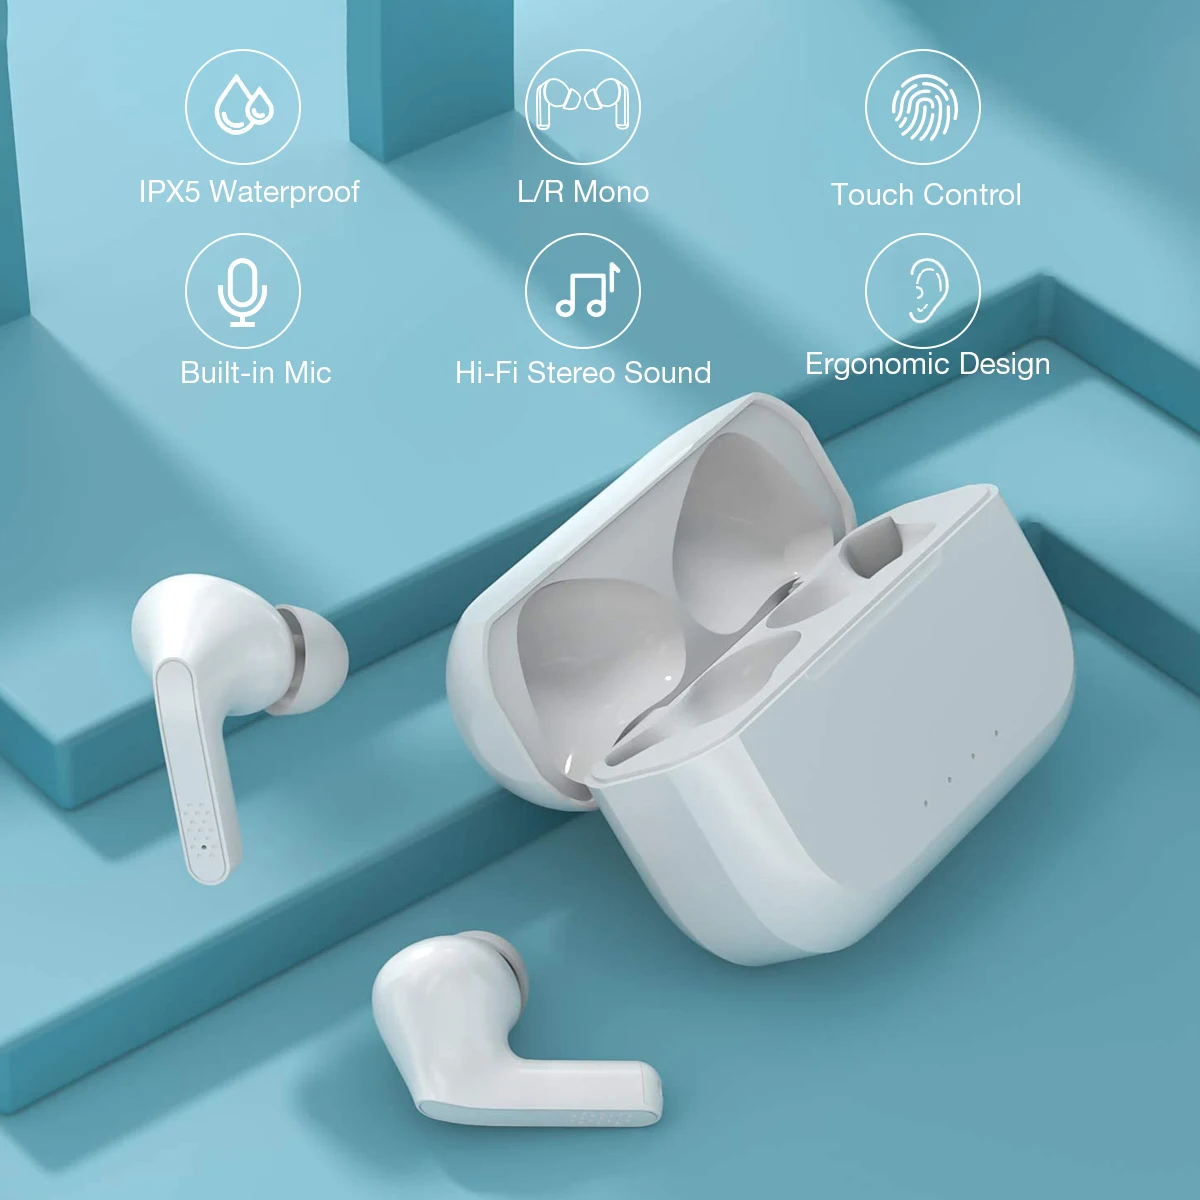 ZQB A3 TWS Air Pro 3 Fone Bluetooth Slúchadlá Bezdrôtové Slúchadlá In-Ear Stereo Slúchadlá S Mikrofónom Bluetooth 5.3 Bezdrôtový Headset